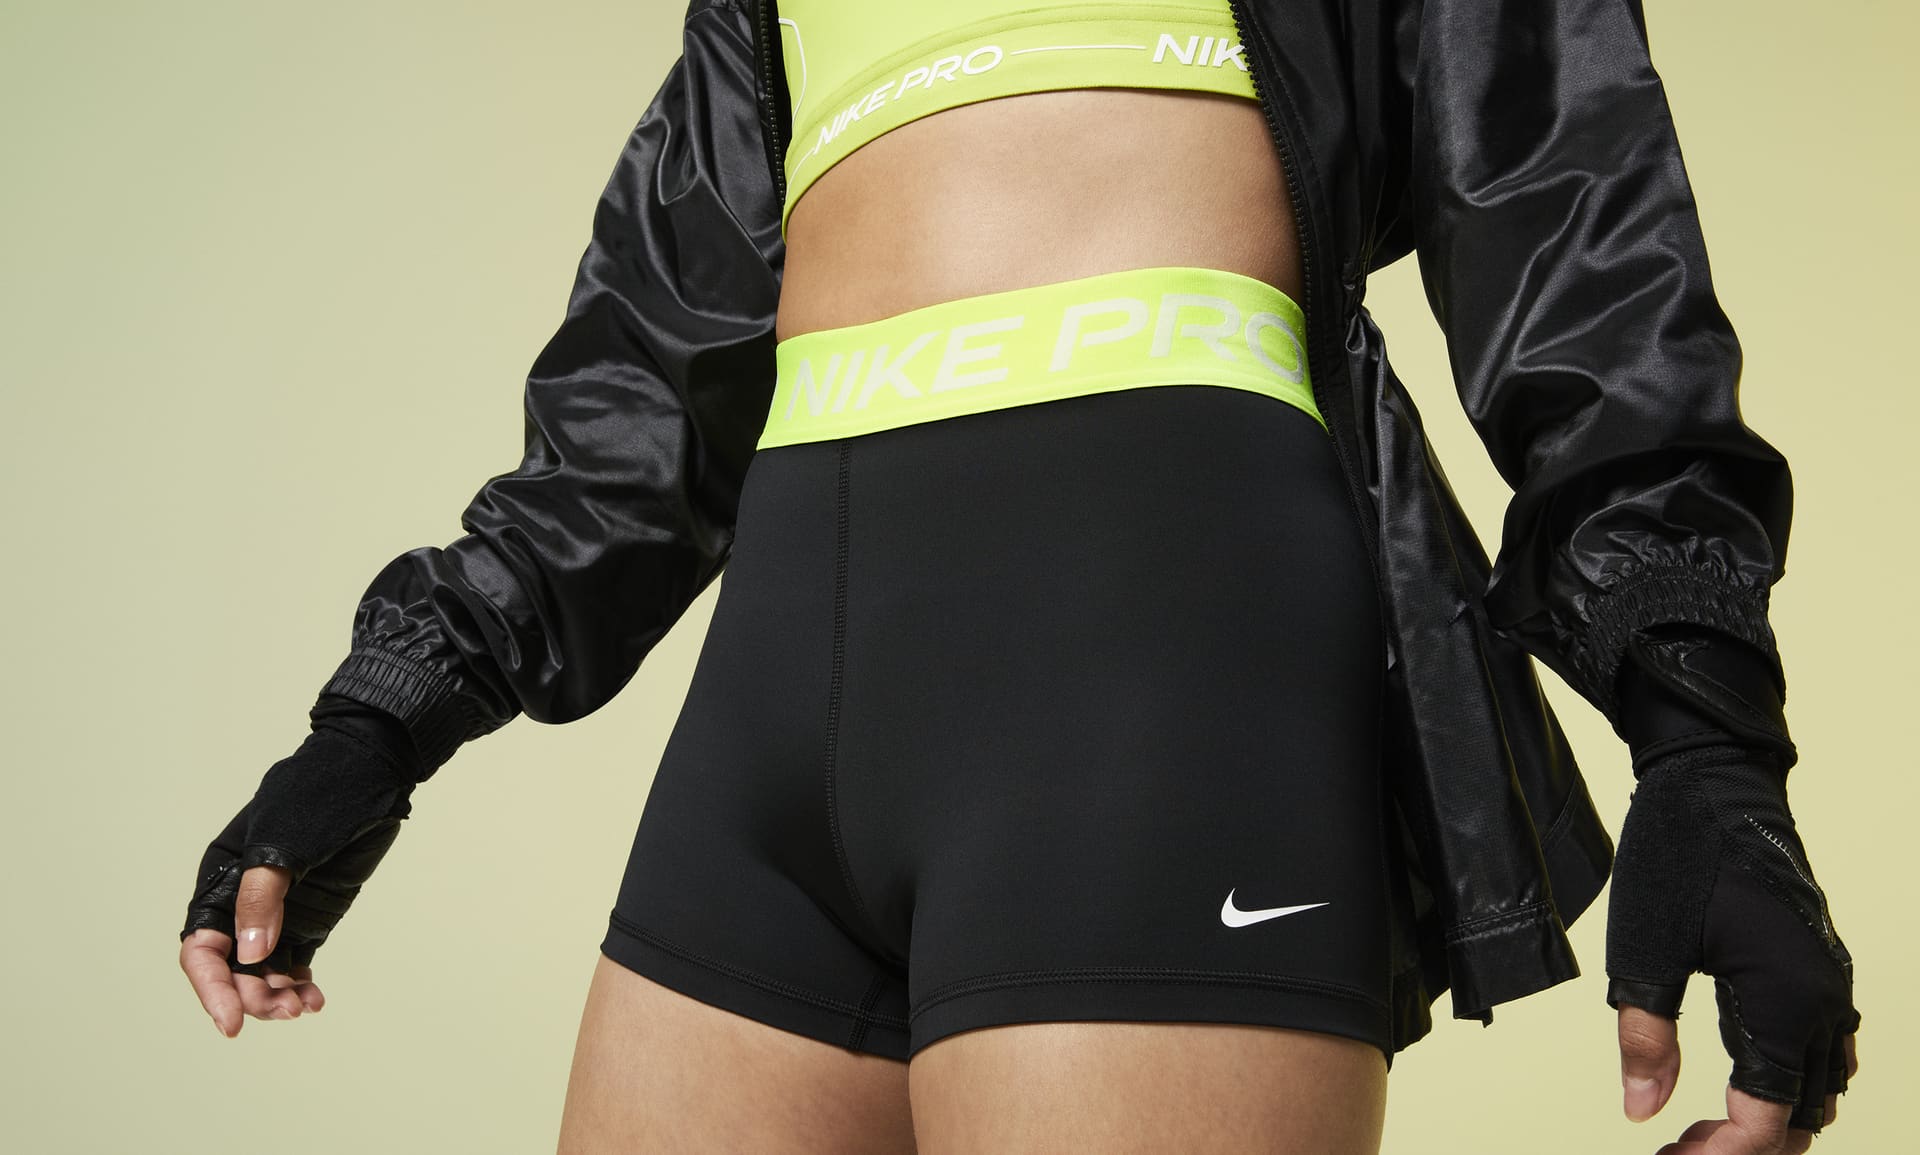 Movimiento ético pedal Nike Pro Women's 3" Shorts. Nike.com